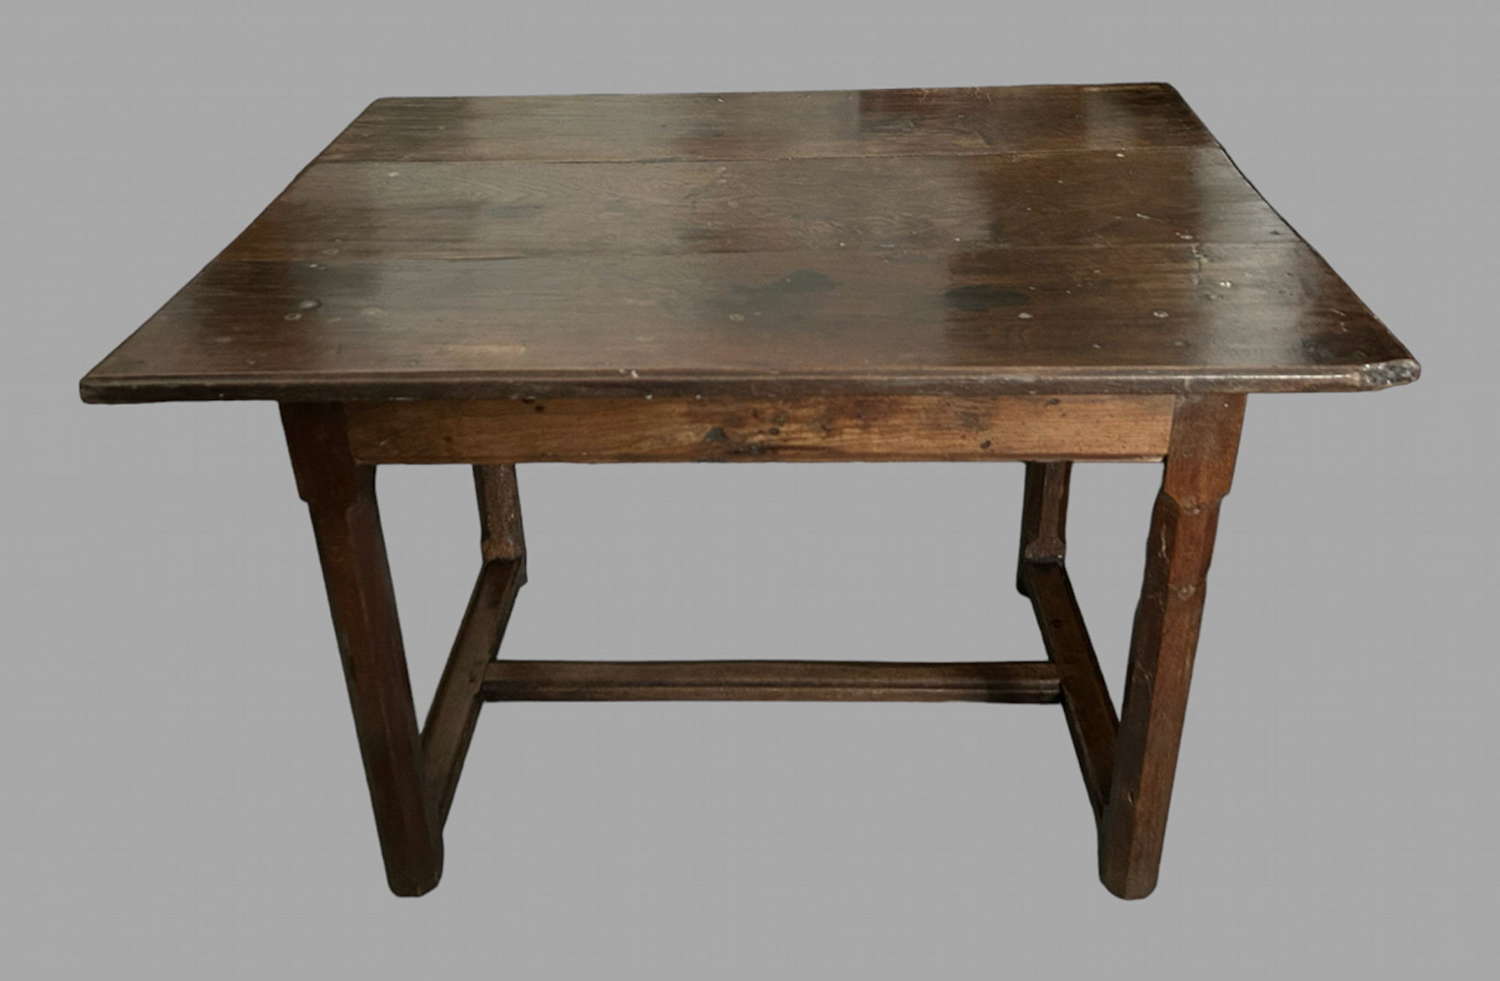 An Early 19thc Oak Table